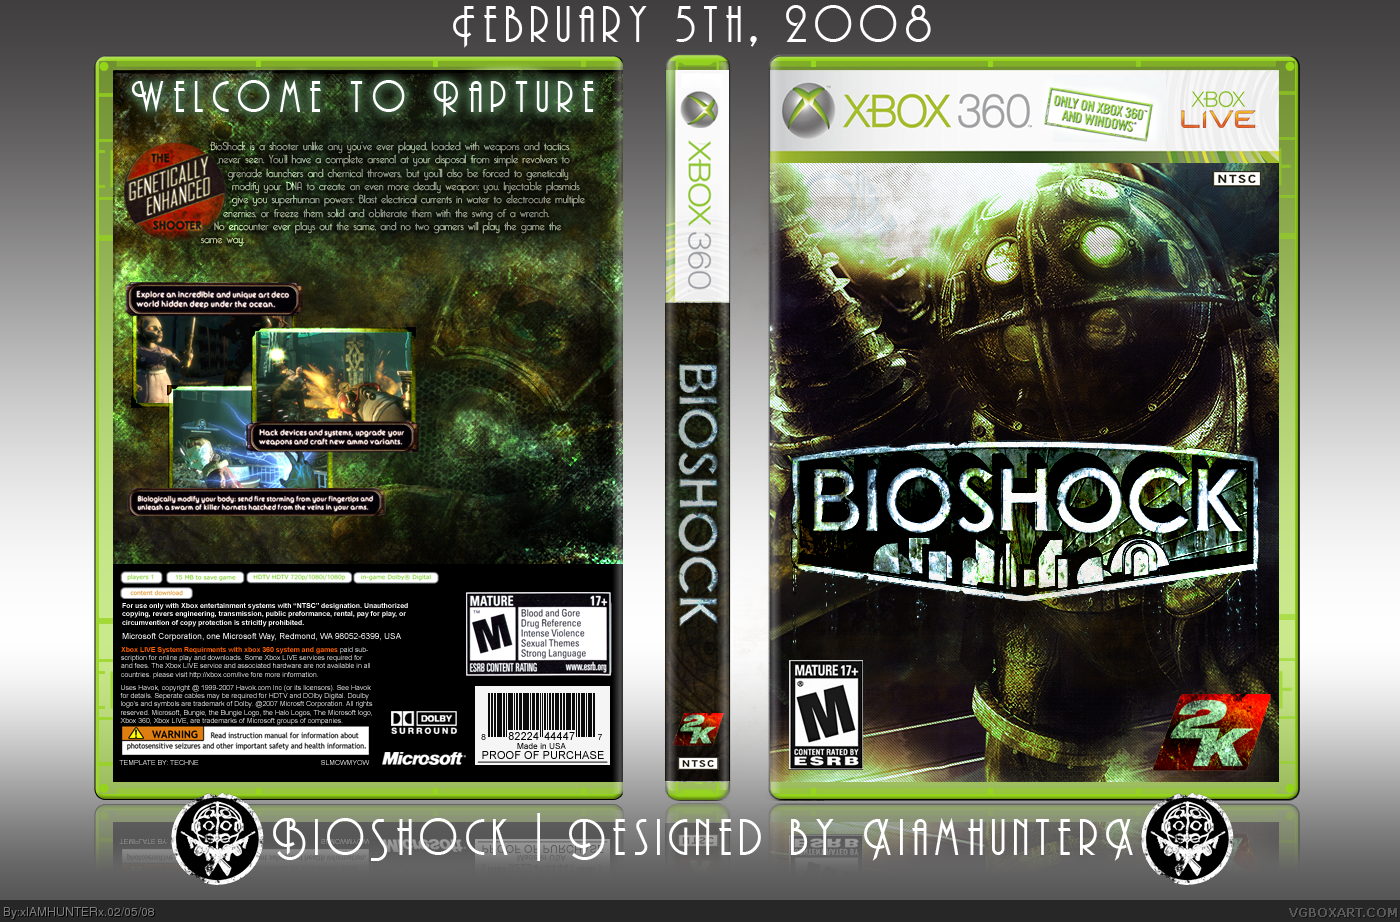 Bioshock Xbox 360 обложка. Биошок 2 обложка иксбокс360. Bioshock 2 Xbox 360 обложка. Хвох 360 диск Bioshock 2.